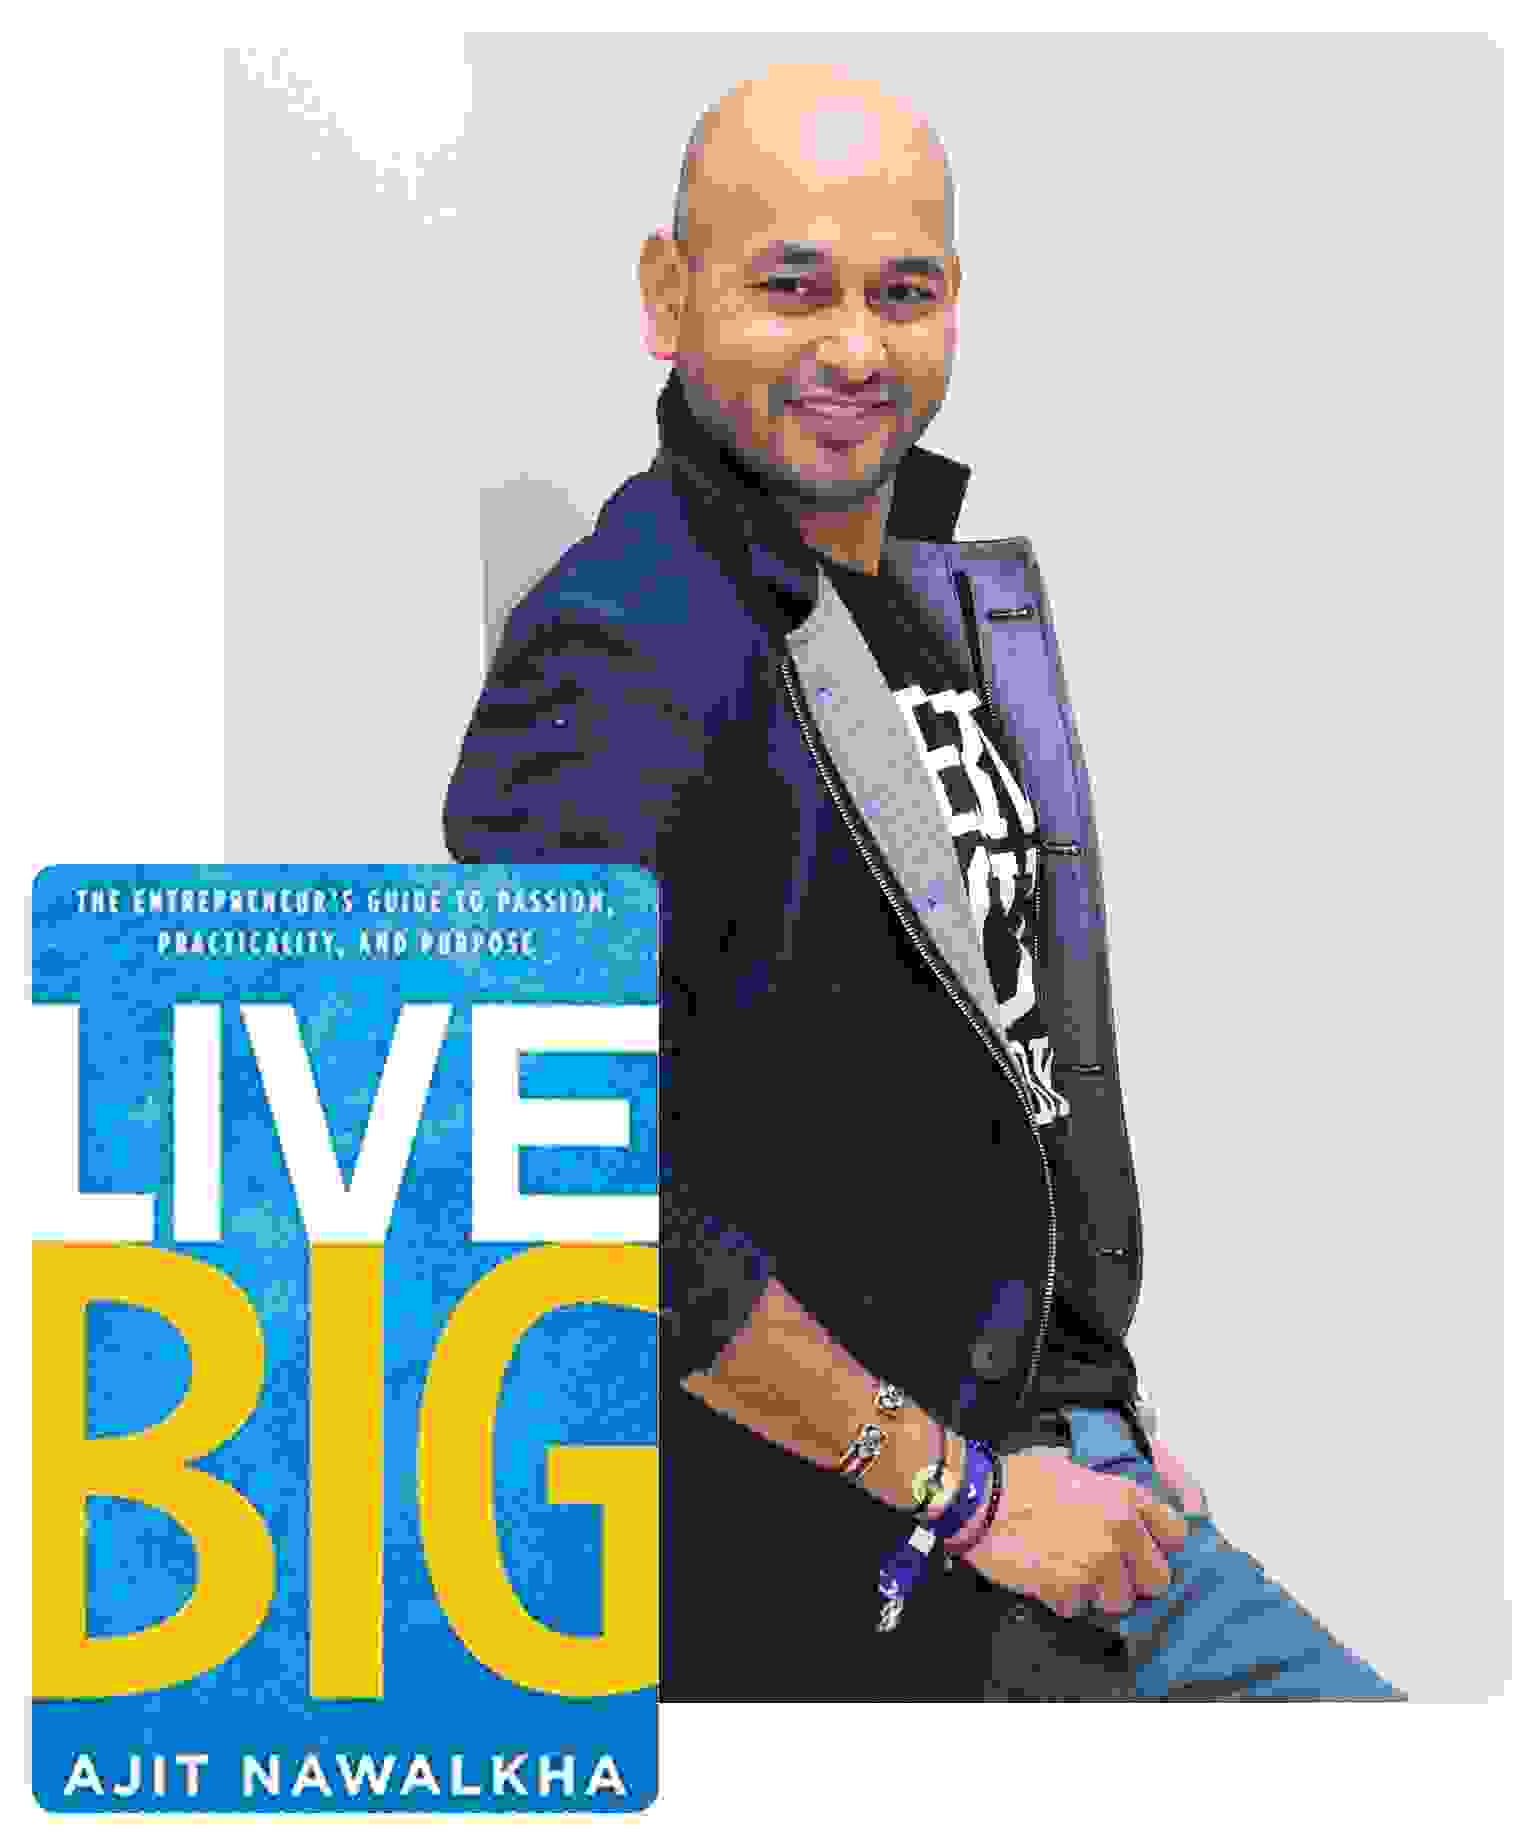 Ajit, author of "Live Big"